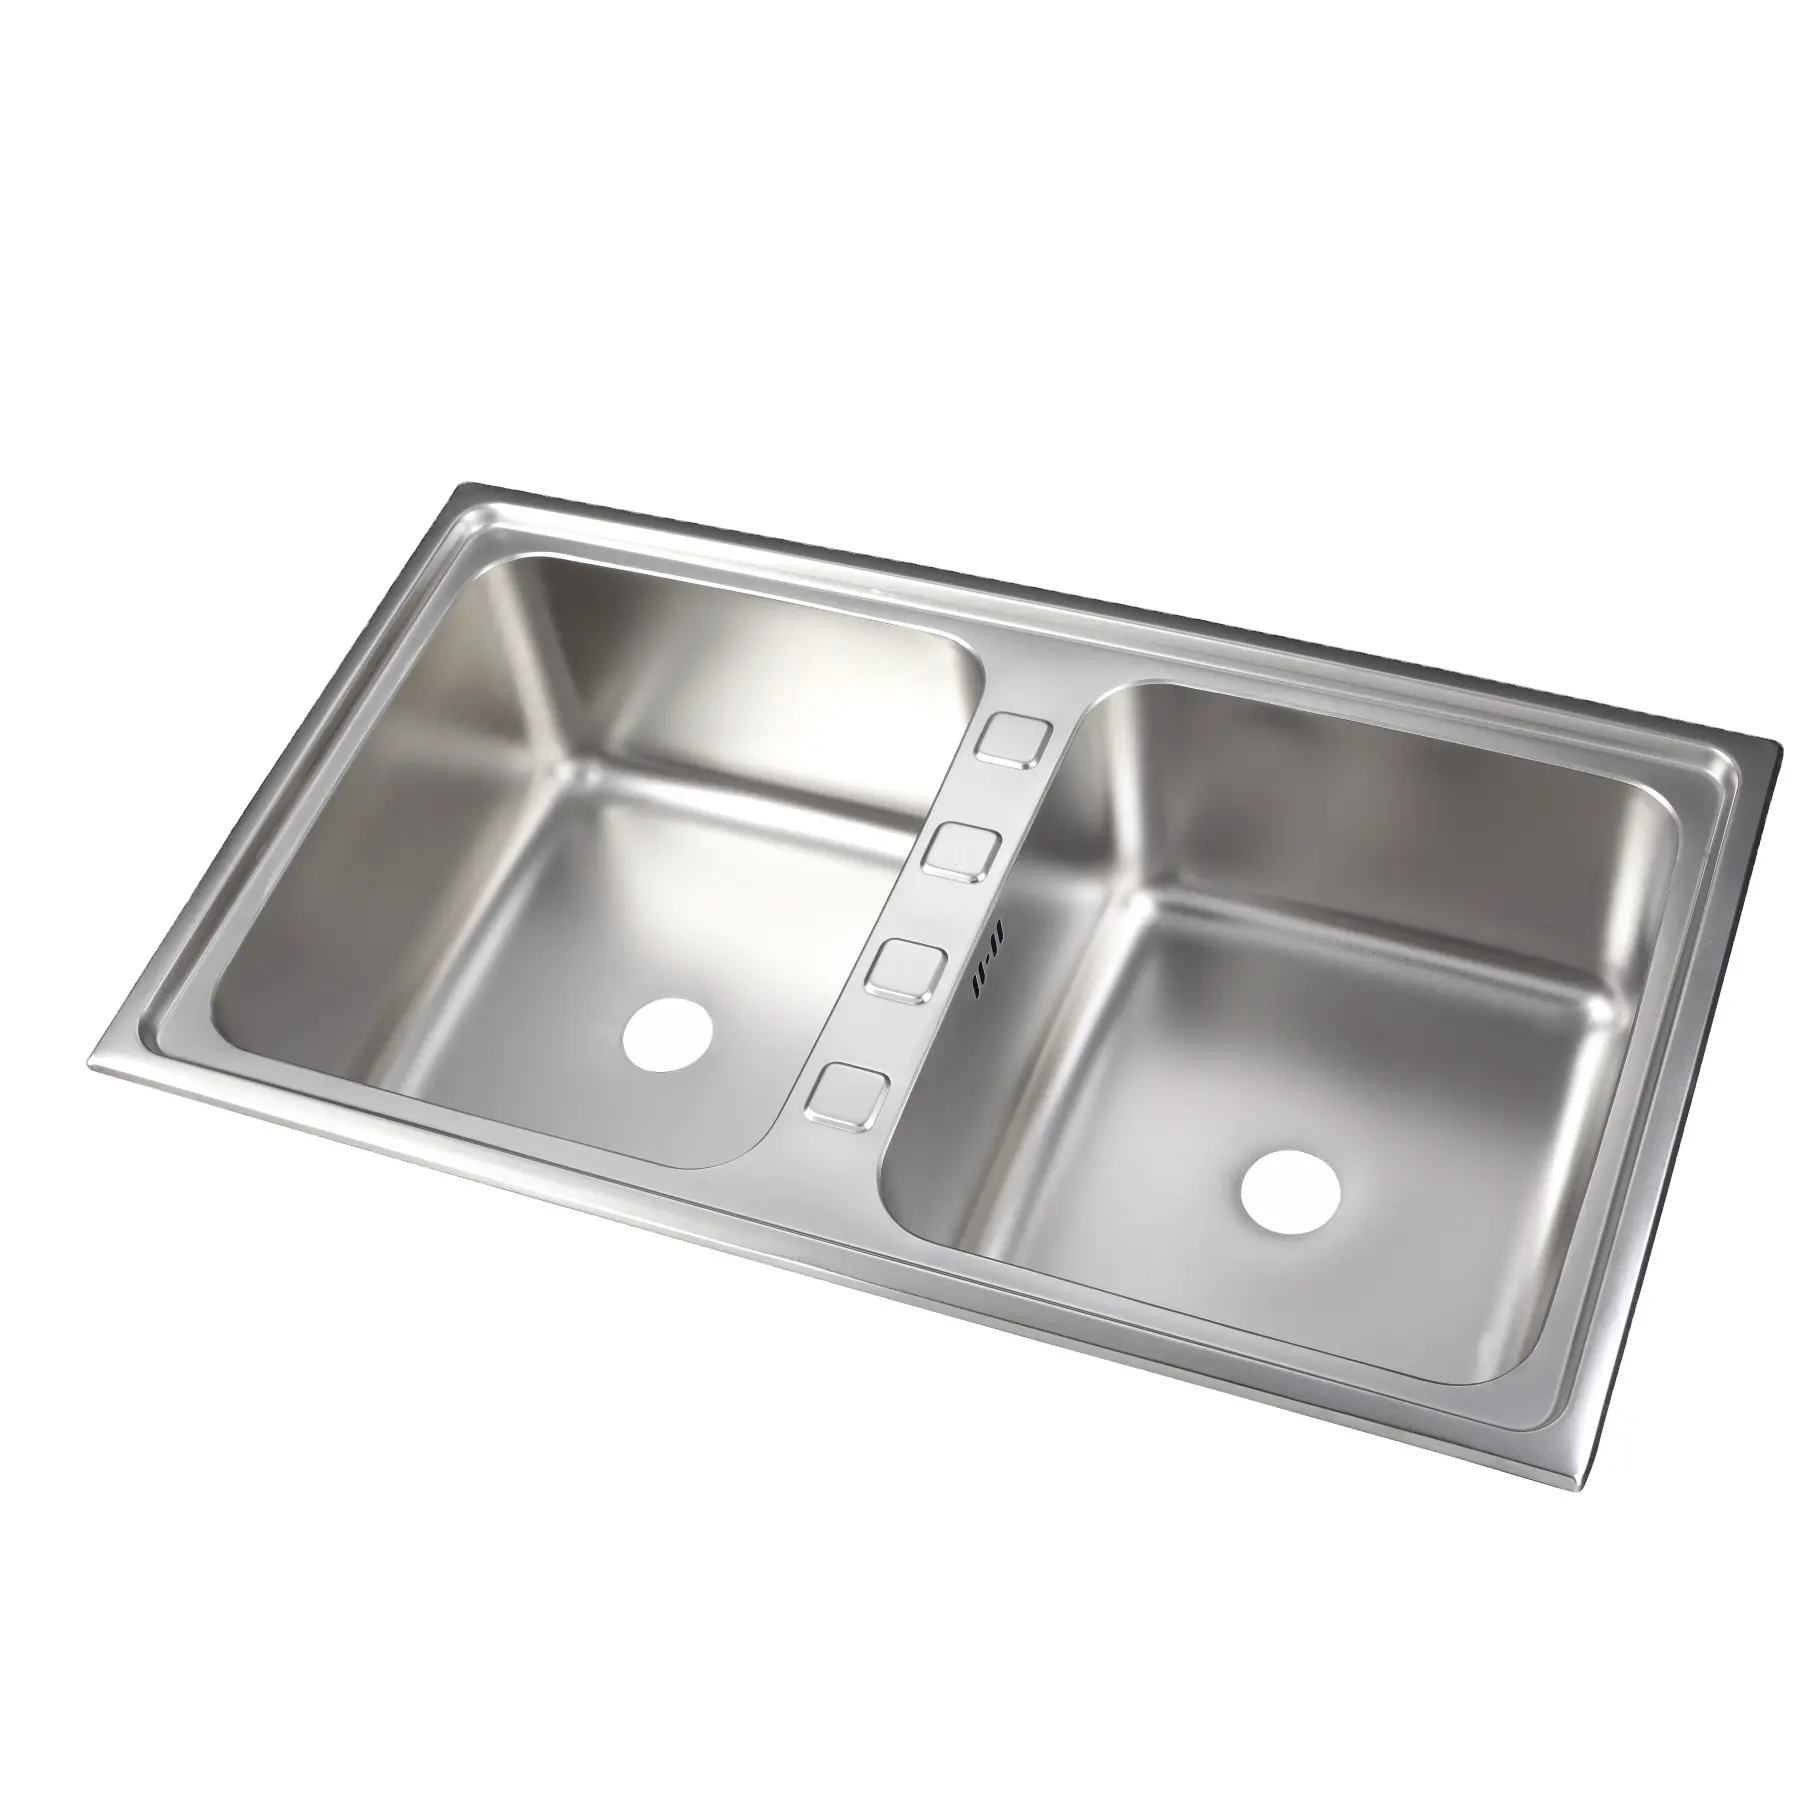 Gudsink 8850 deep press double bowl sinks stainless steel kitchen sink